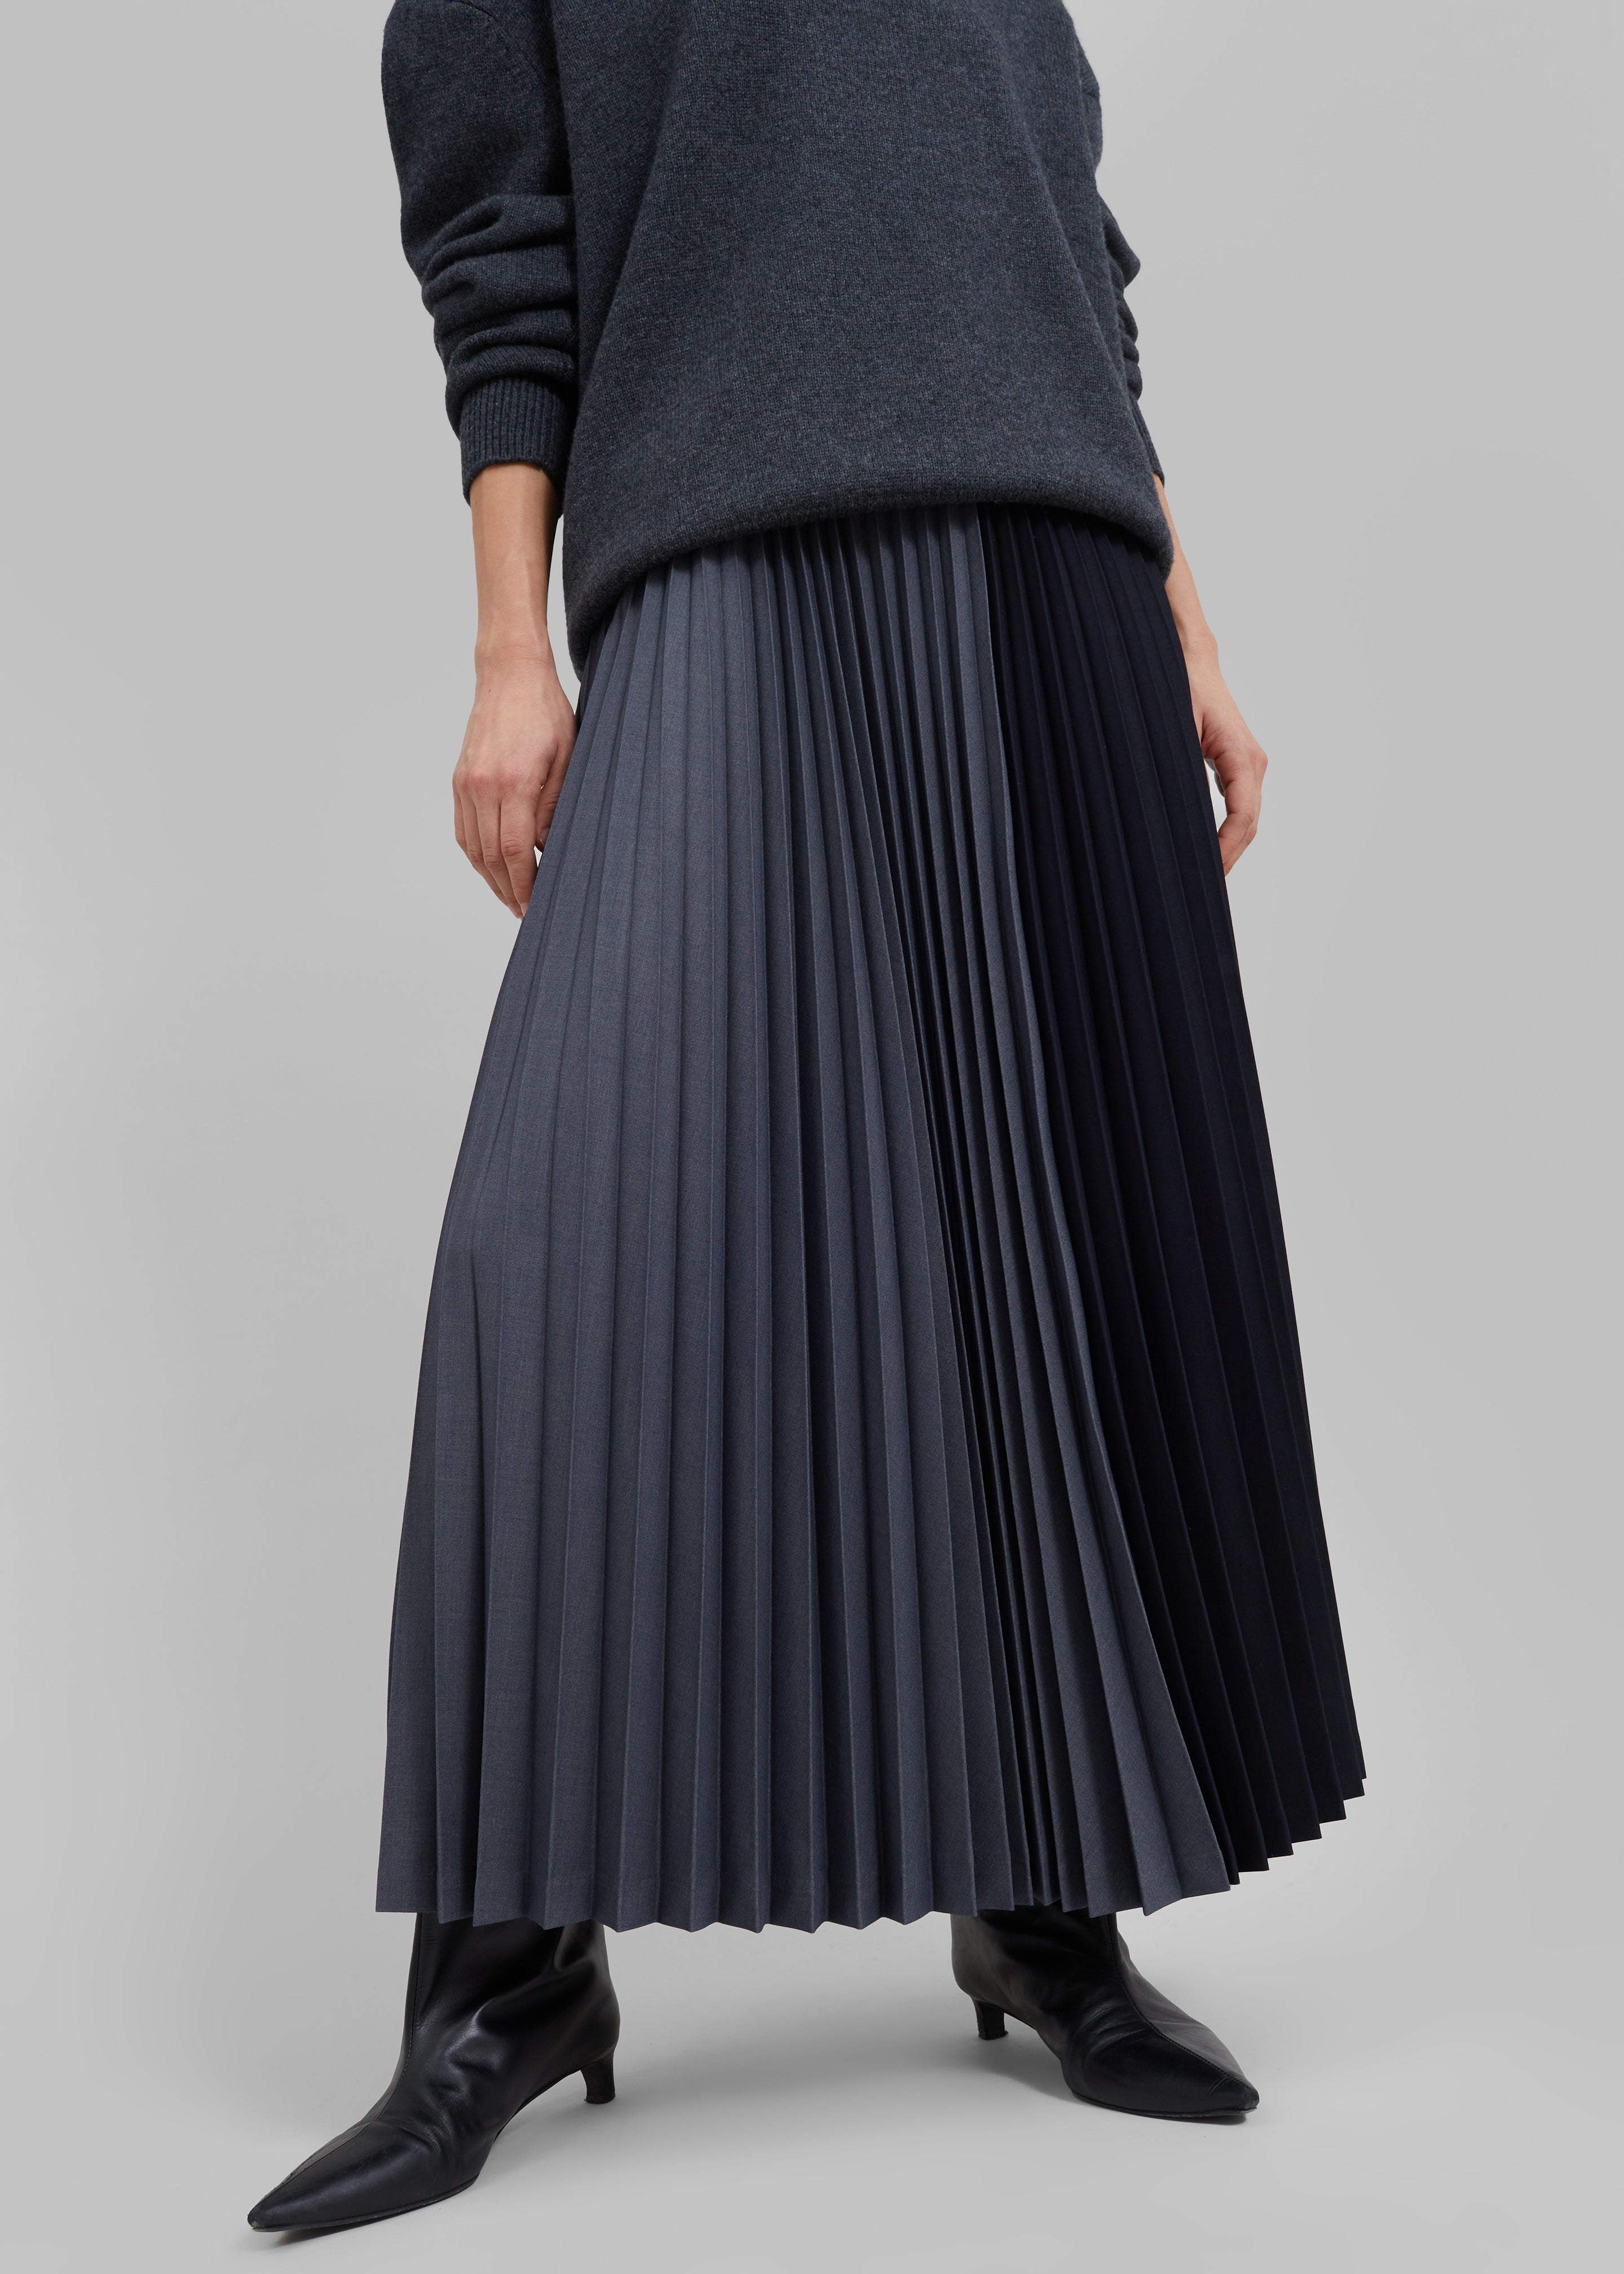 Orem Pleated Skirt - Charcoal - 4